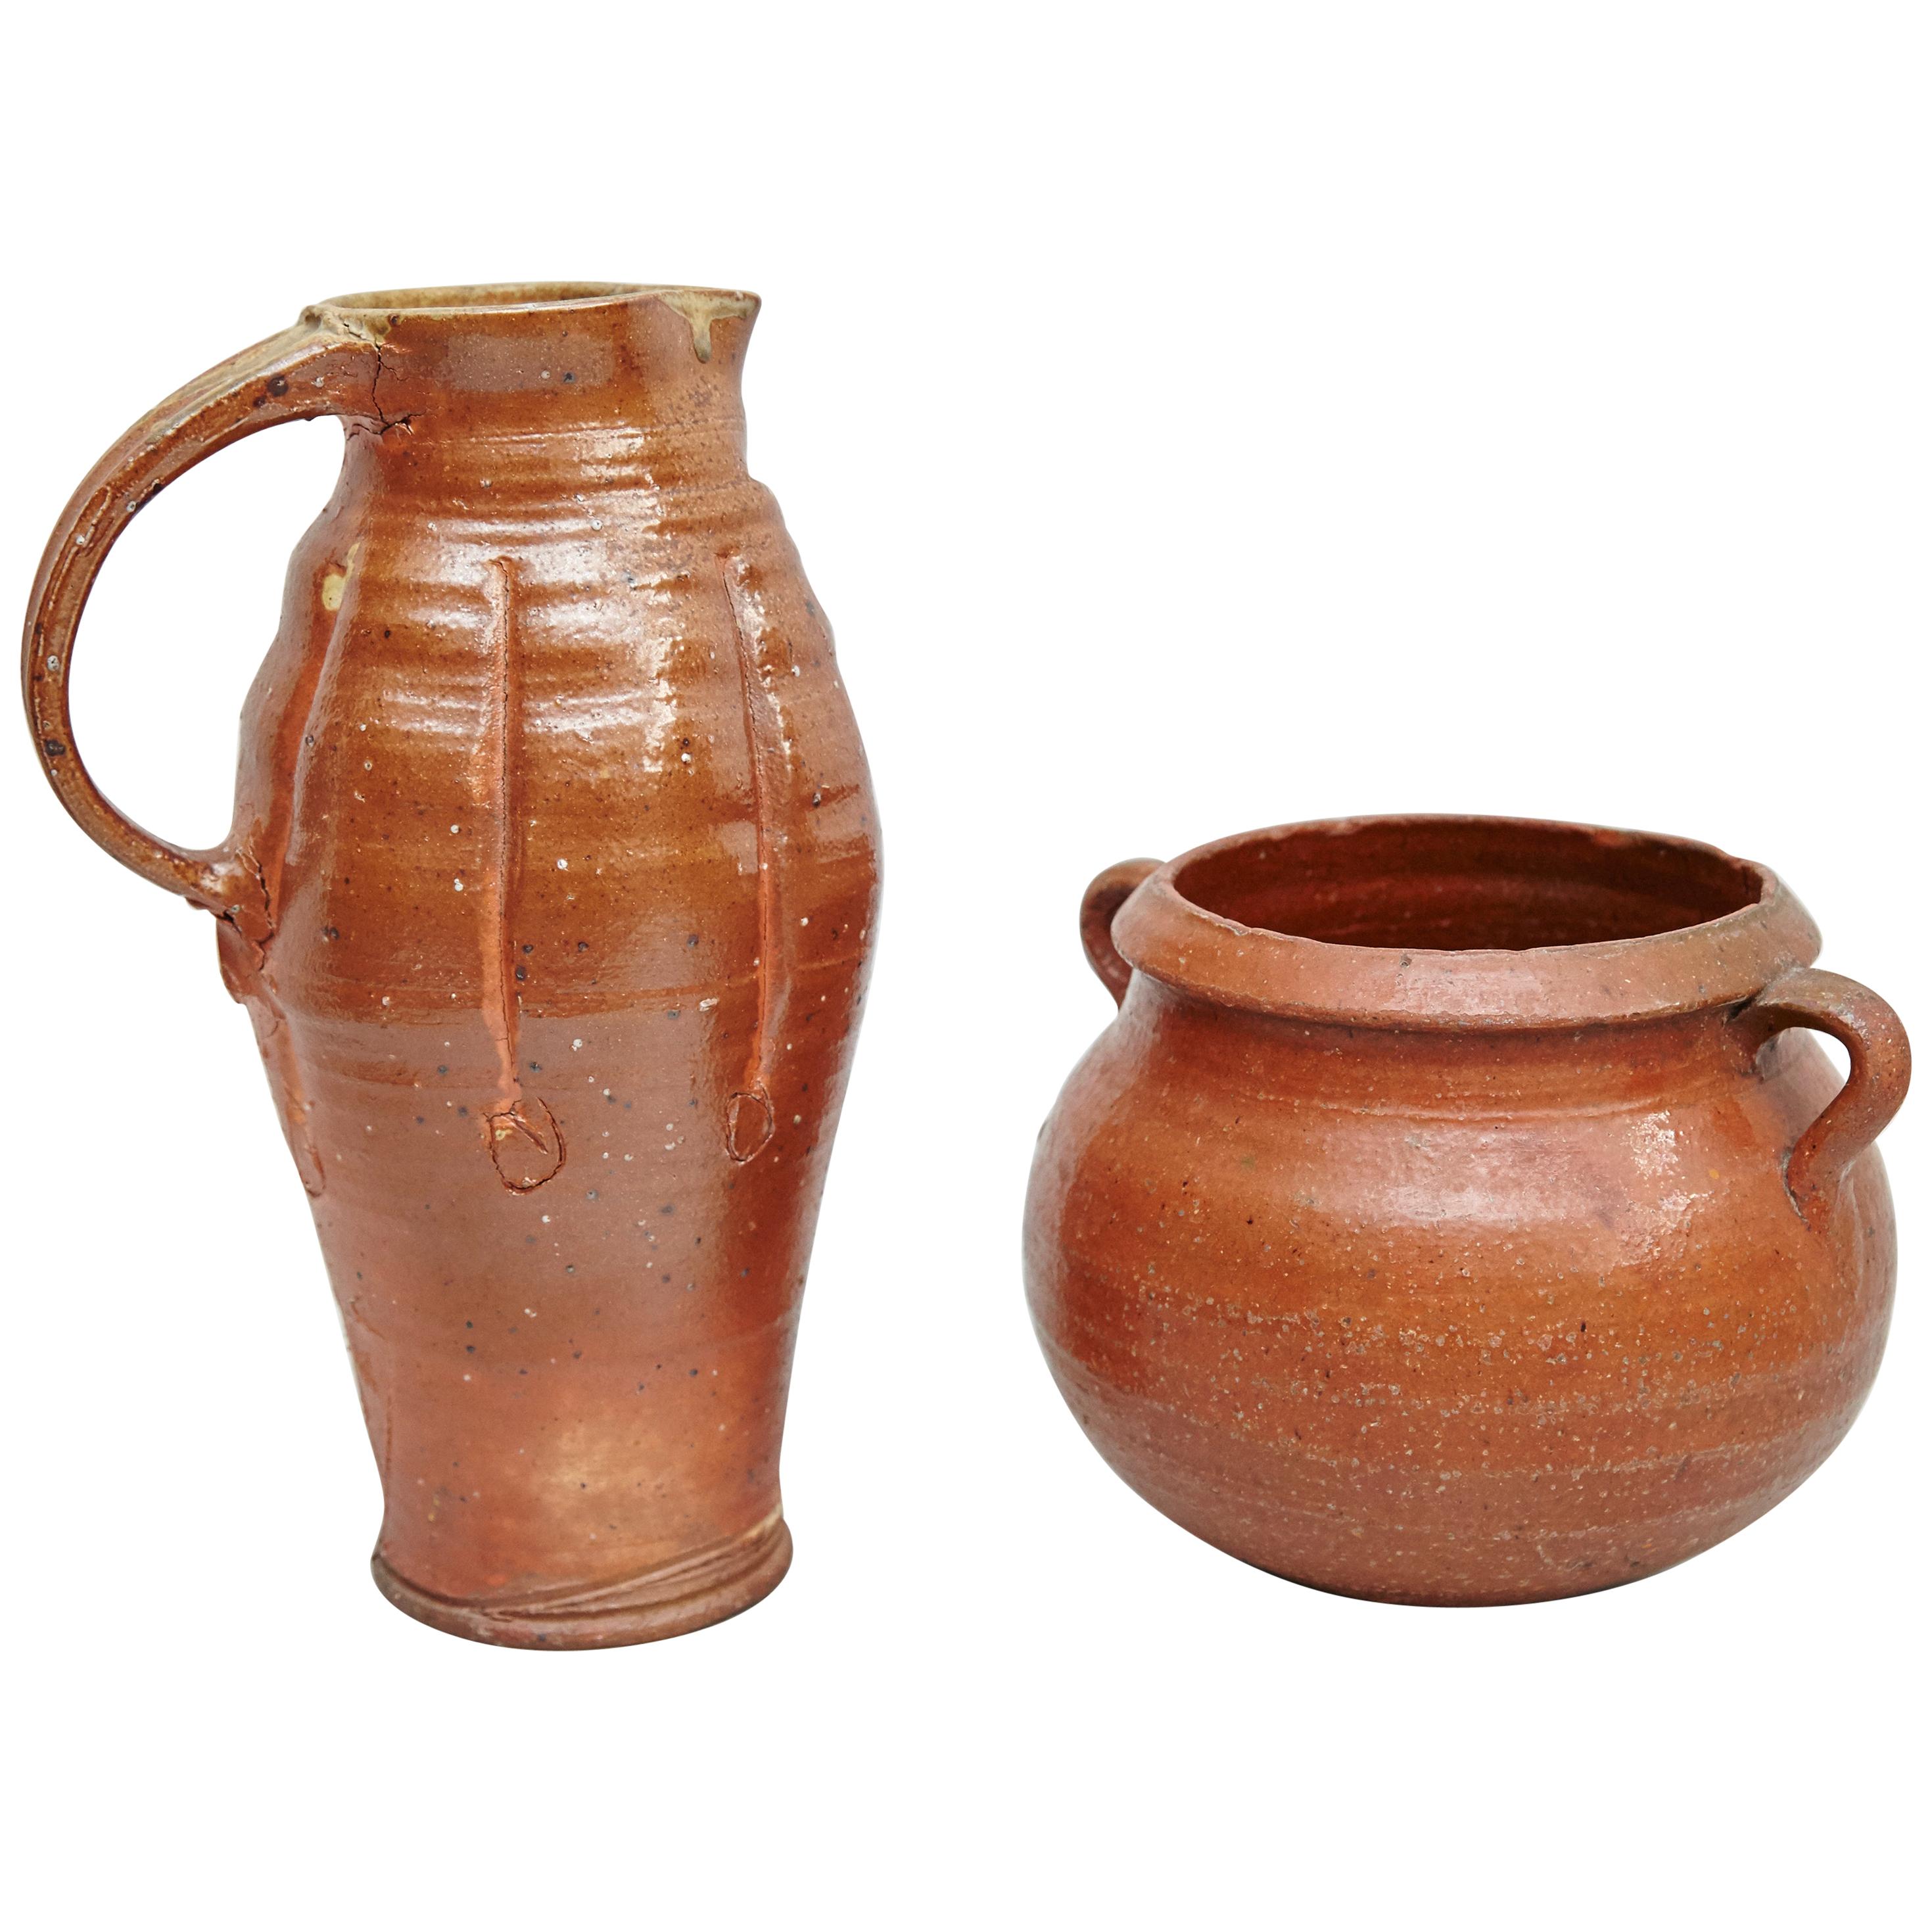 Set of Two Traditional Spanish Ceramics